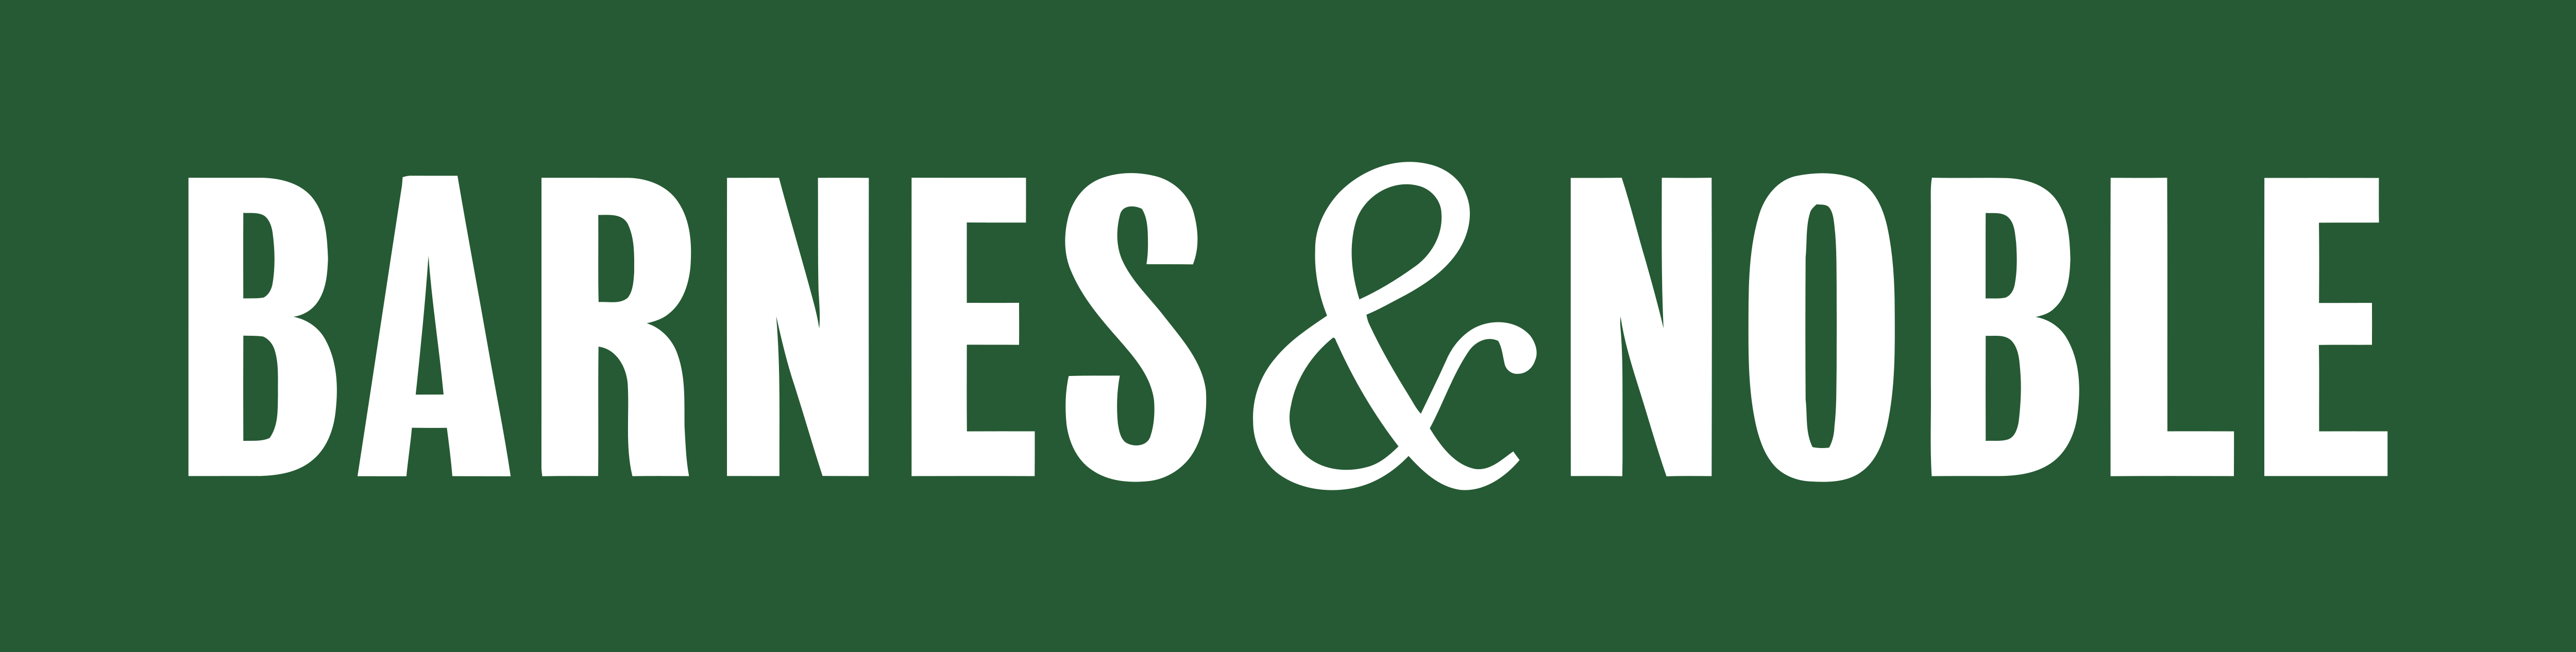 Barnes Noble Logos Download